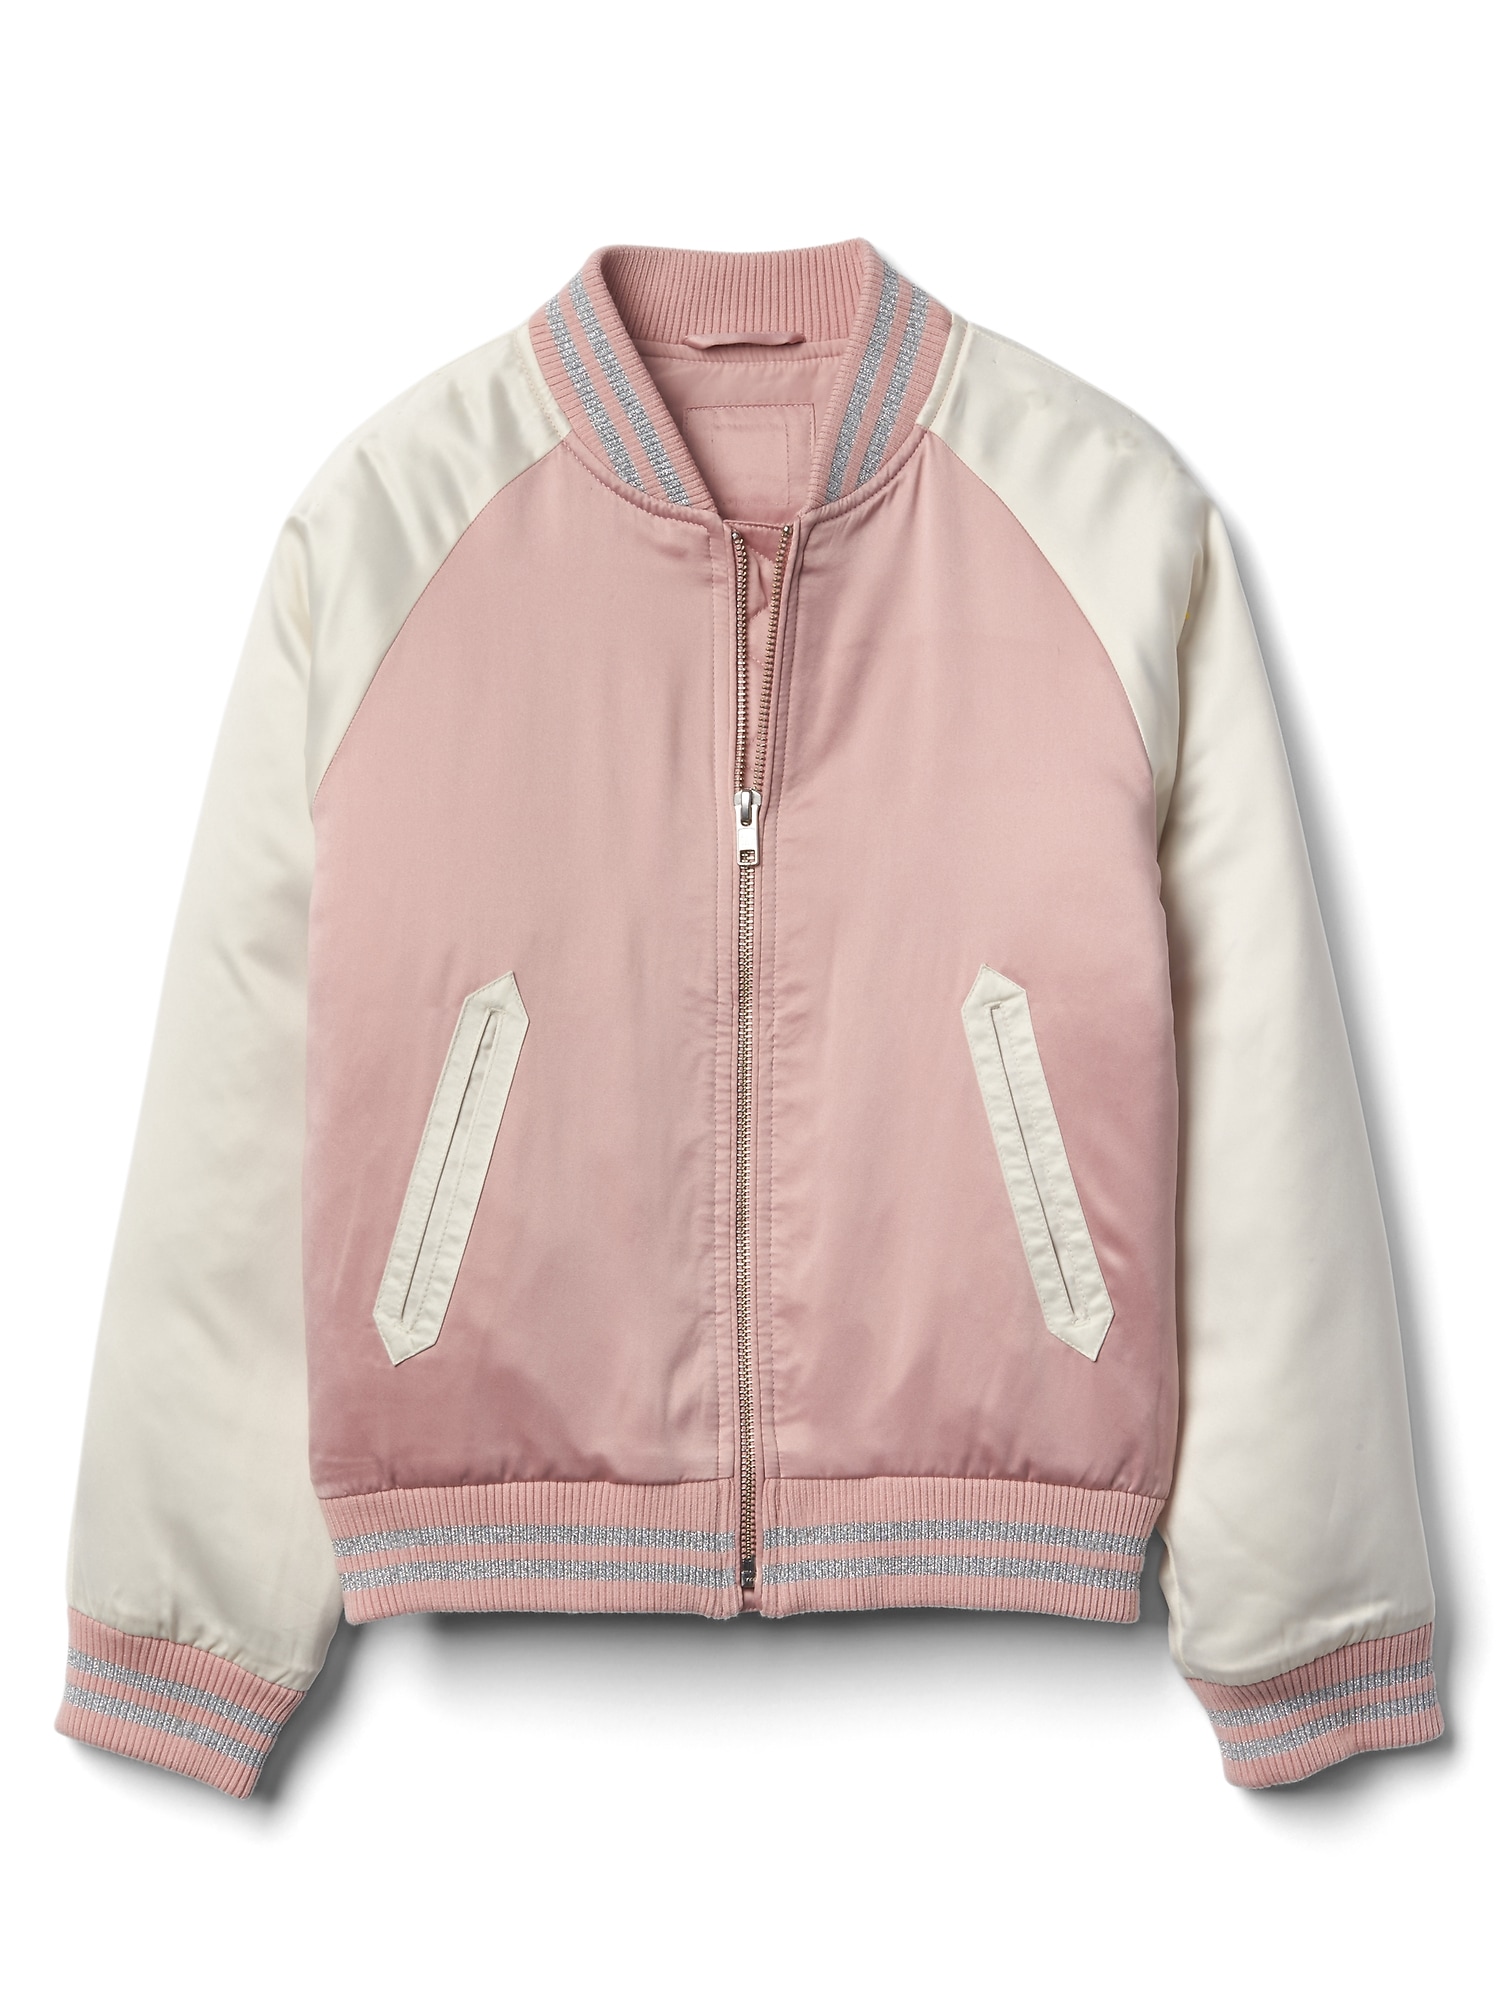 GAP | Jackets & Coats | Gap Mens Varsity Windbreaker Jacket Size Large |  Poshmark